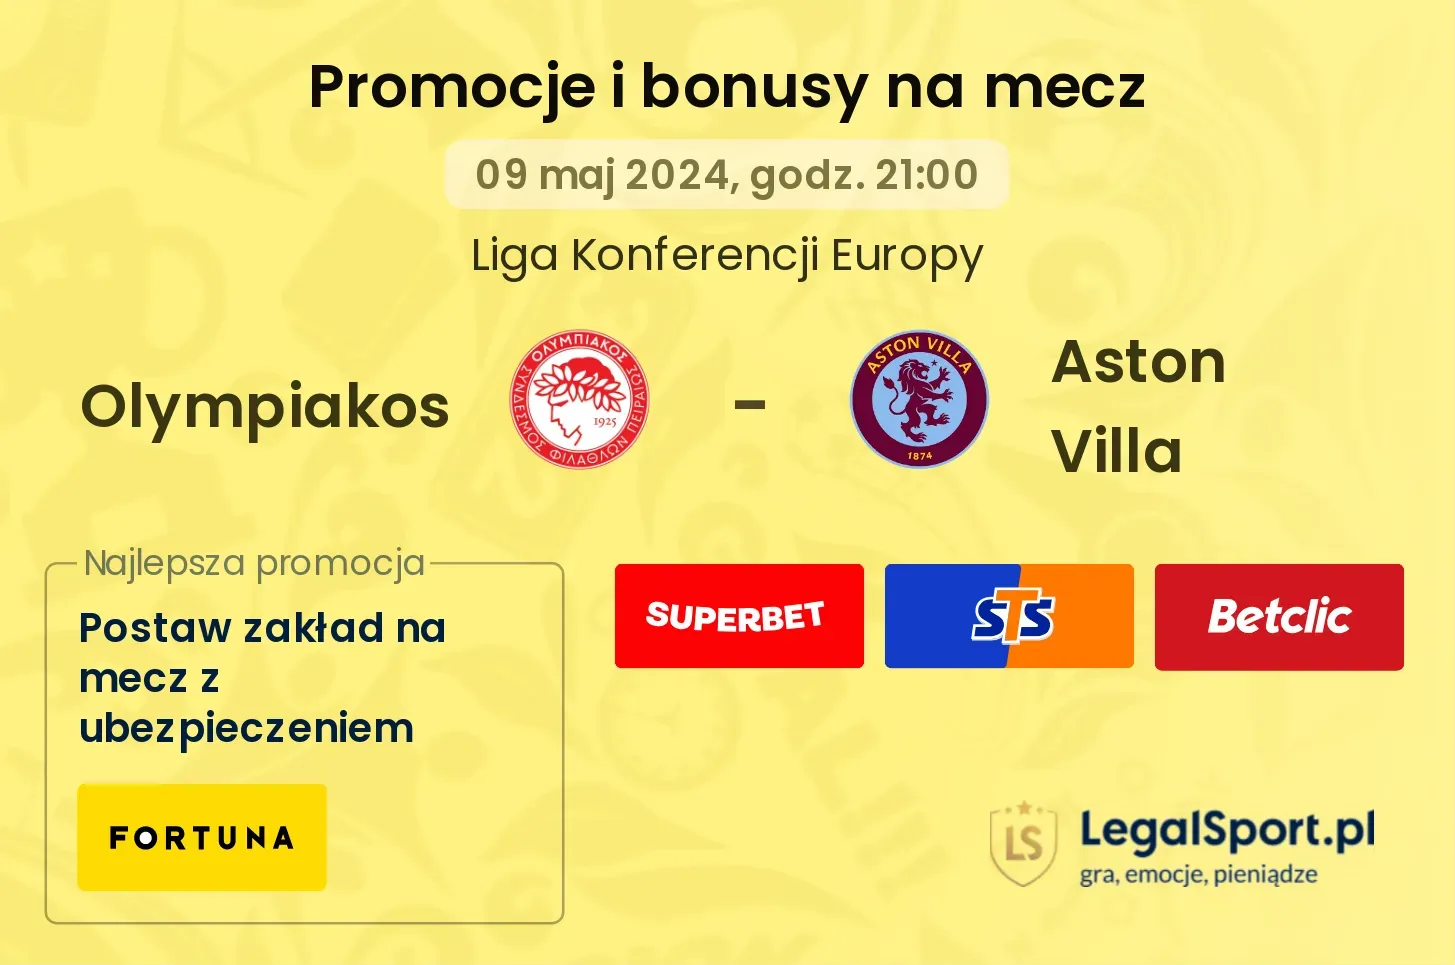 Olympiakos - Aston Villa promocje bonusy na mecz